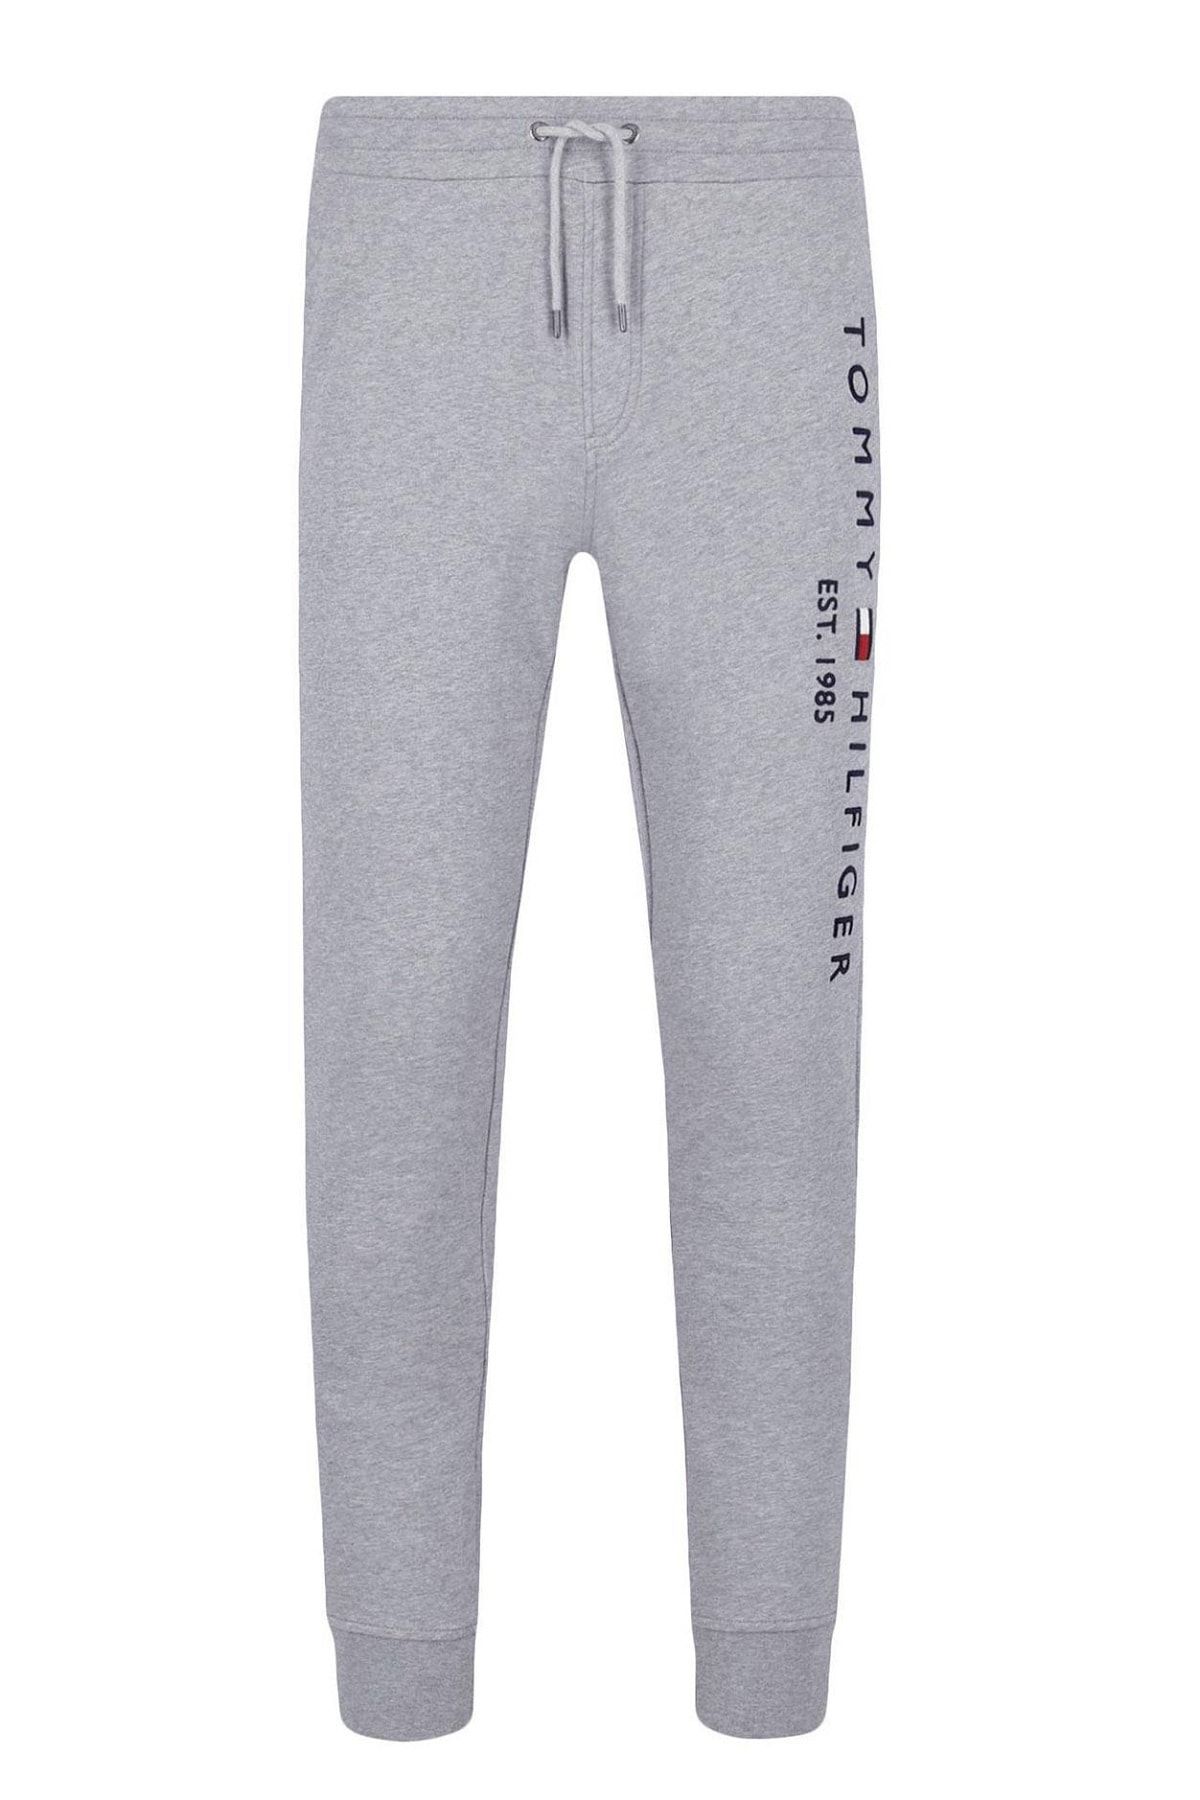 Tommy Hilfiger Men's Gray Basic Sweatpants Mw0mw08388-grey - Trendyol